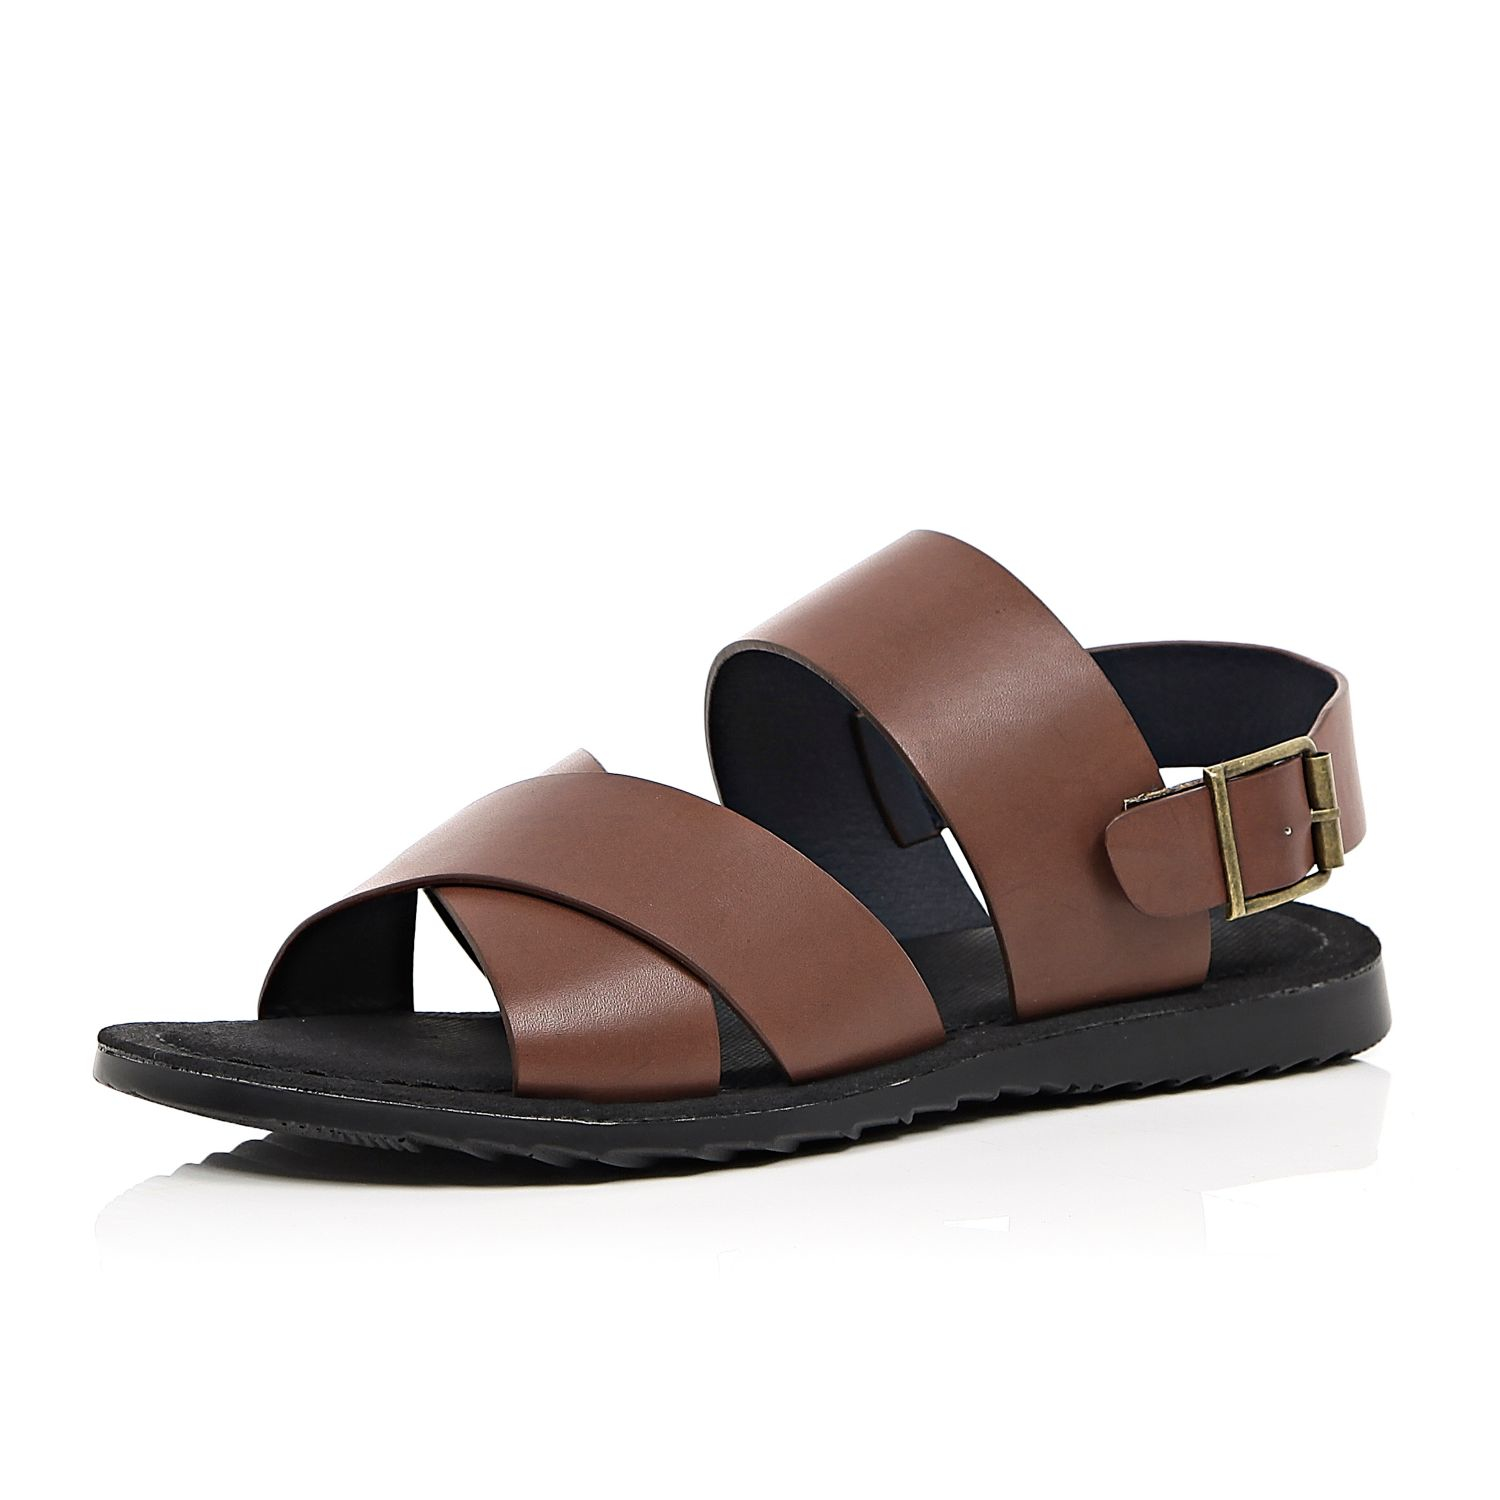 brown back strap sandal